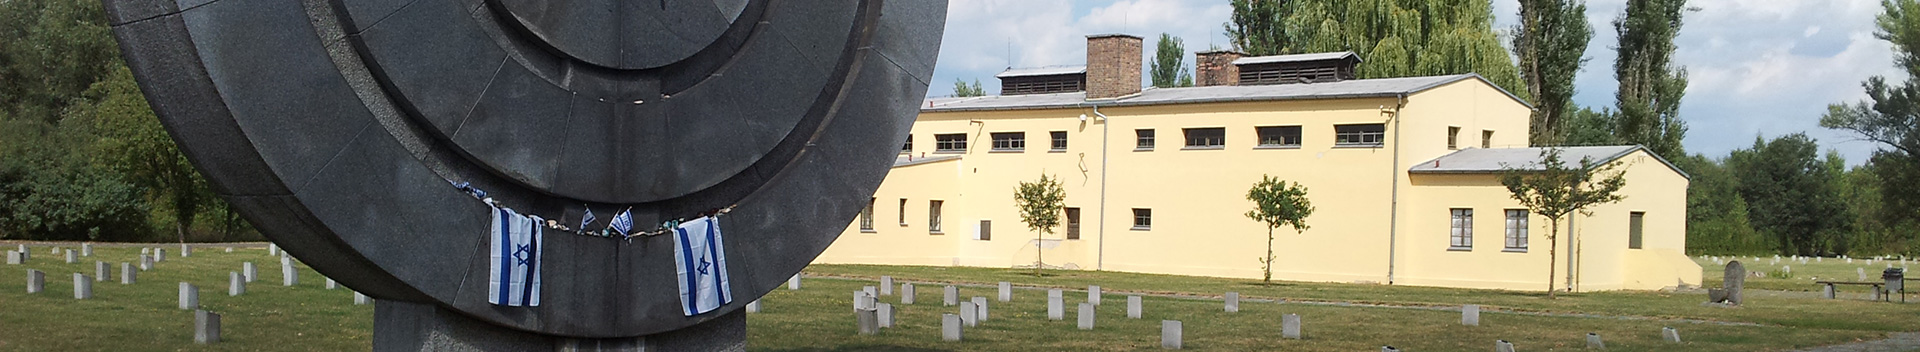 Lidice Memorial & Terezin Concentration Camp – Prague to Lidice